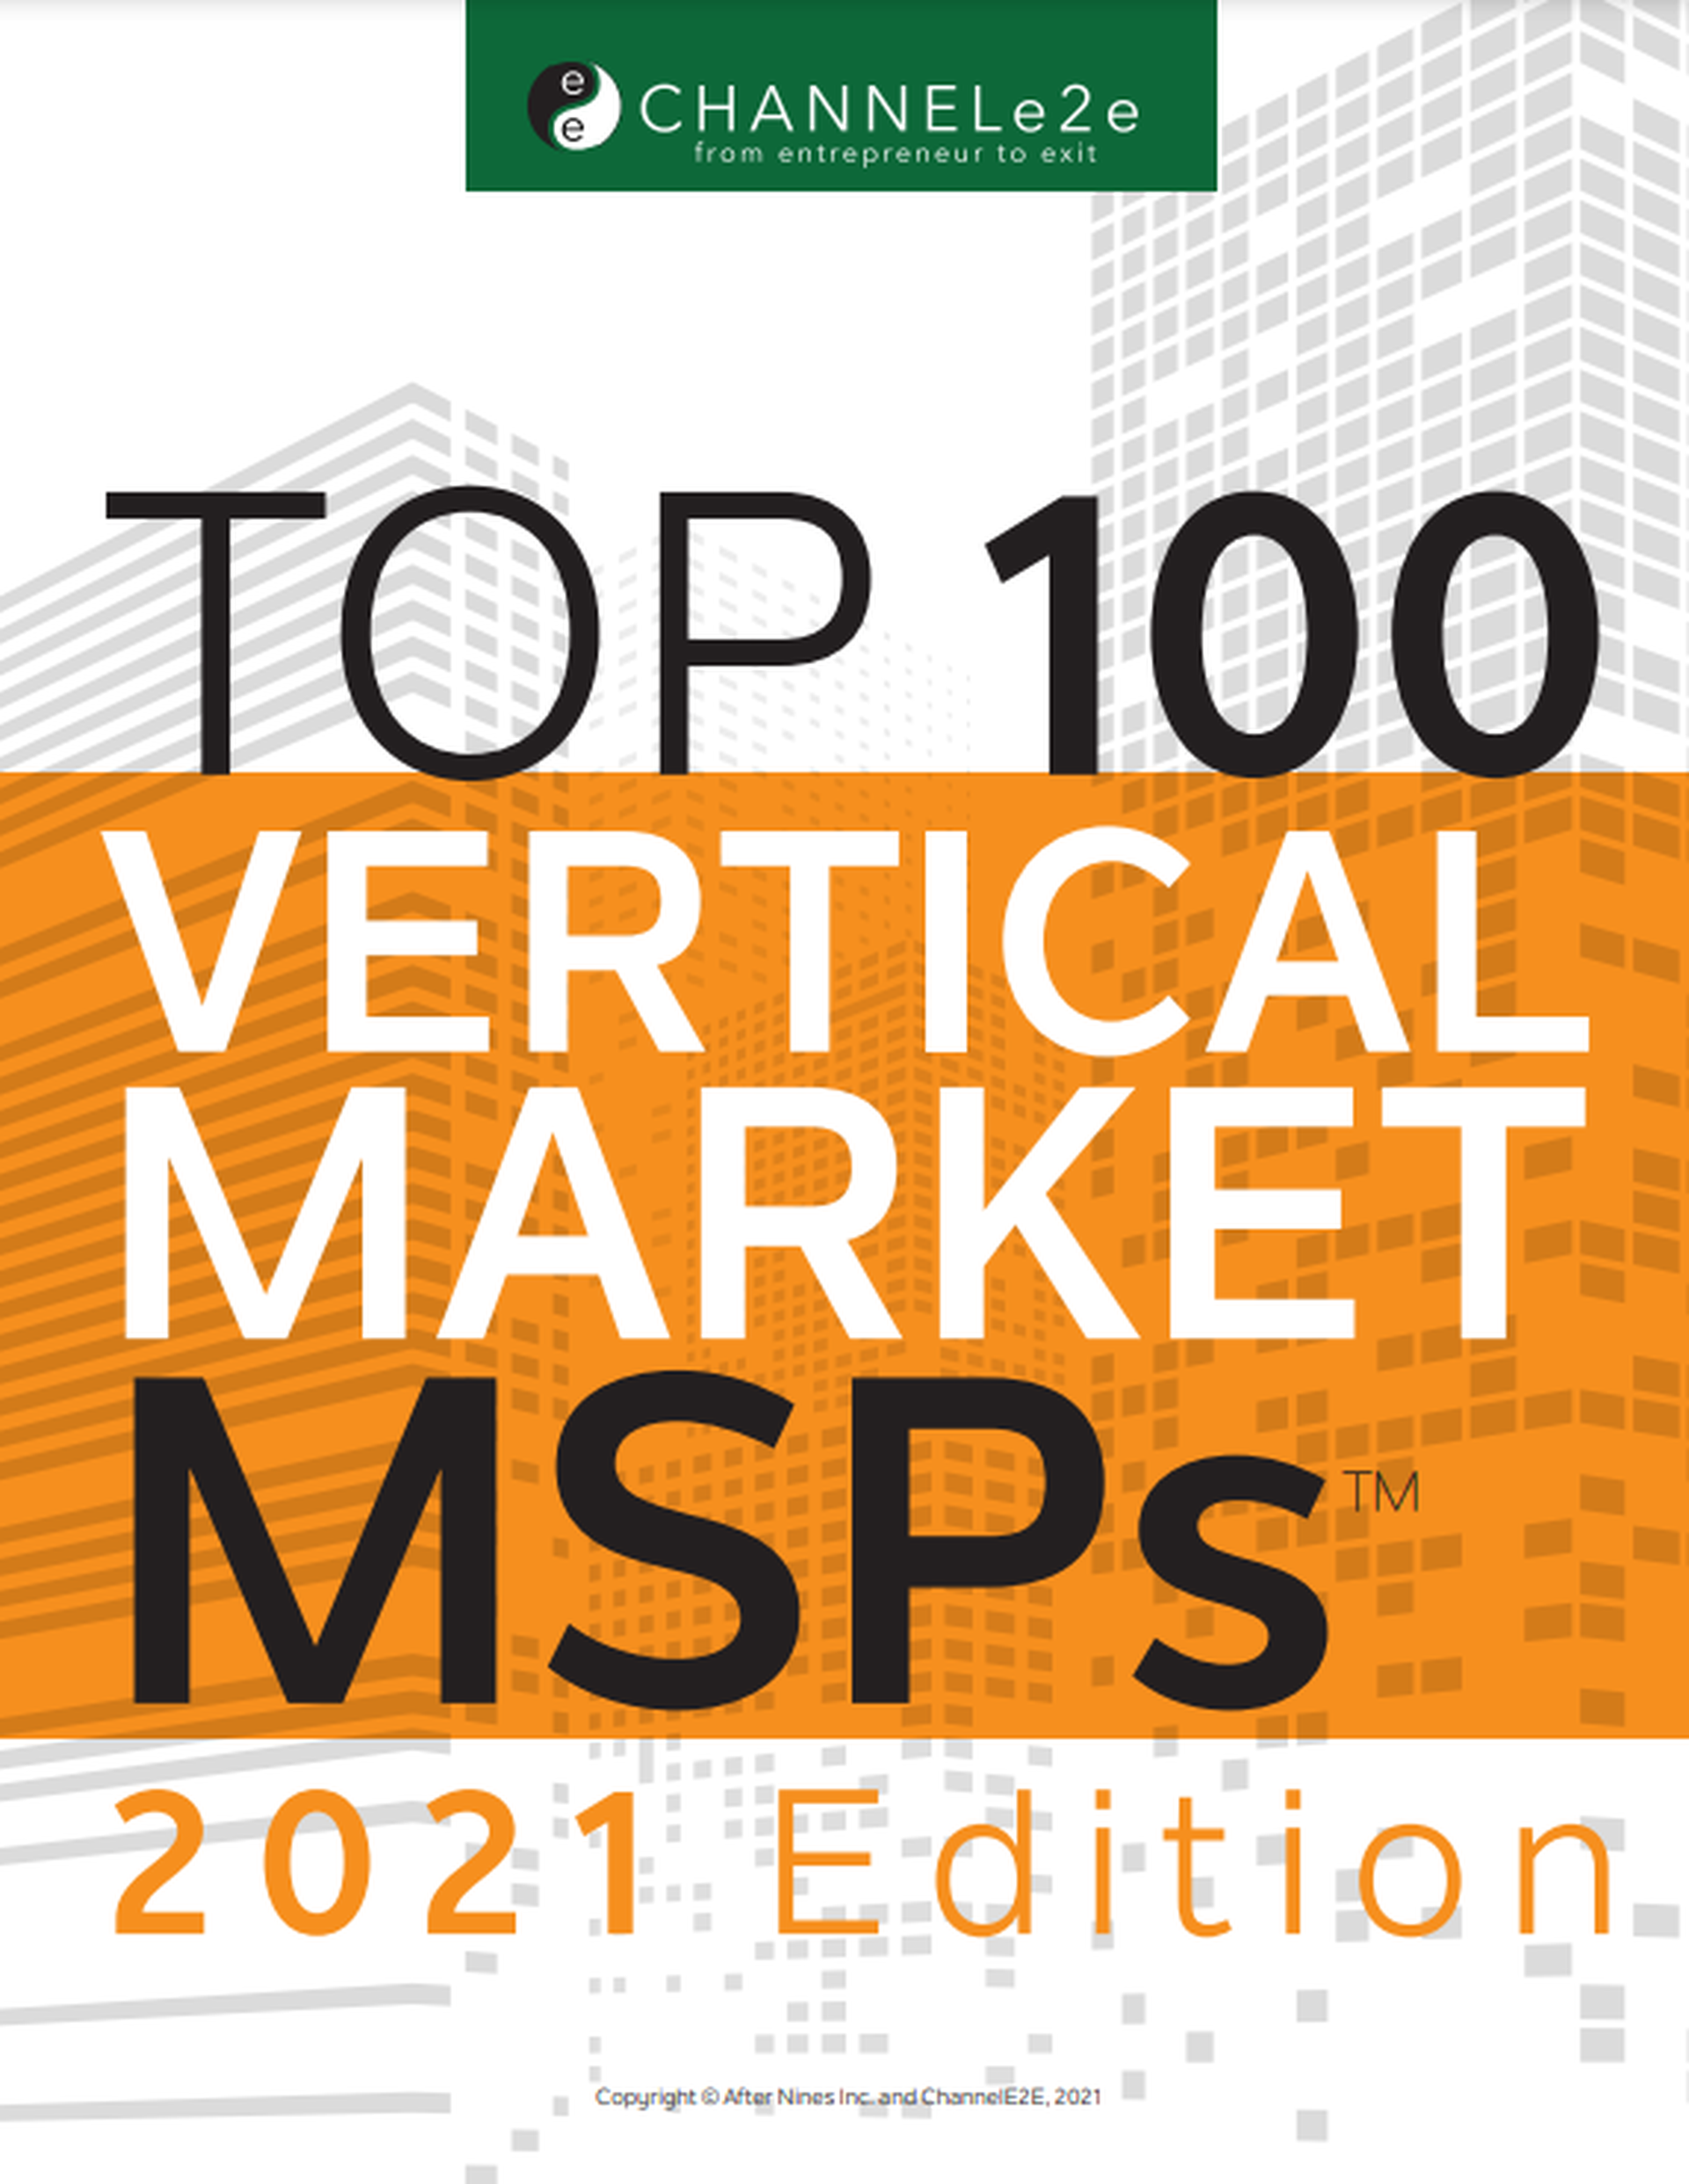 Top 100 Vertical Market MSPs 2021 Edition